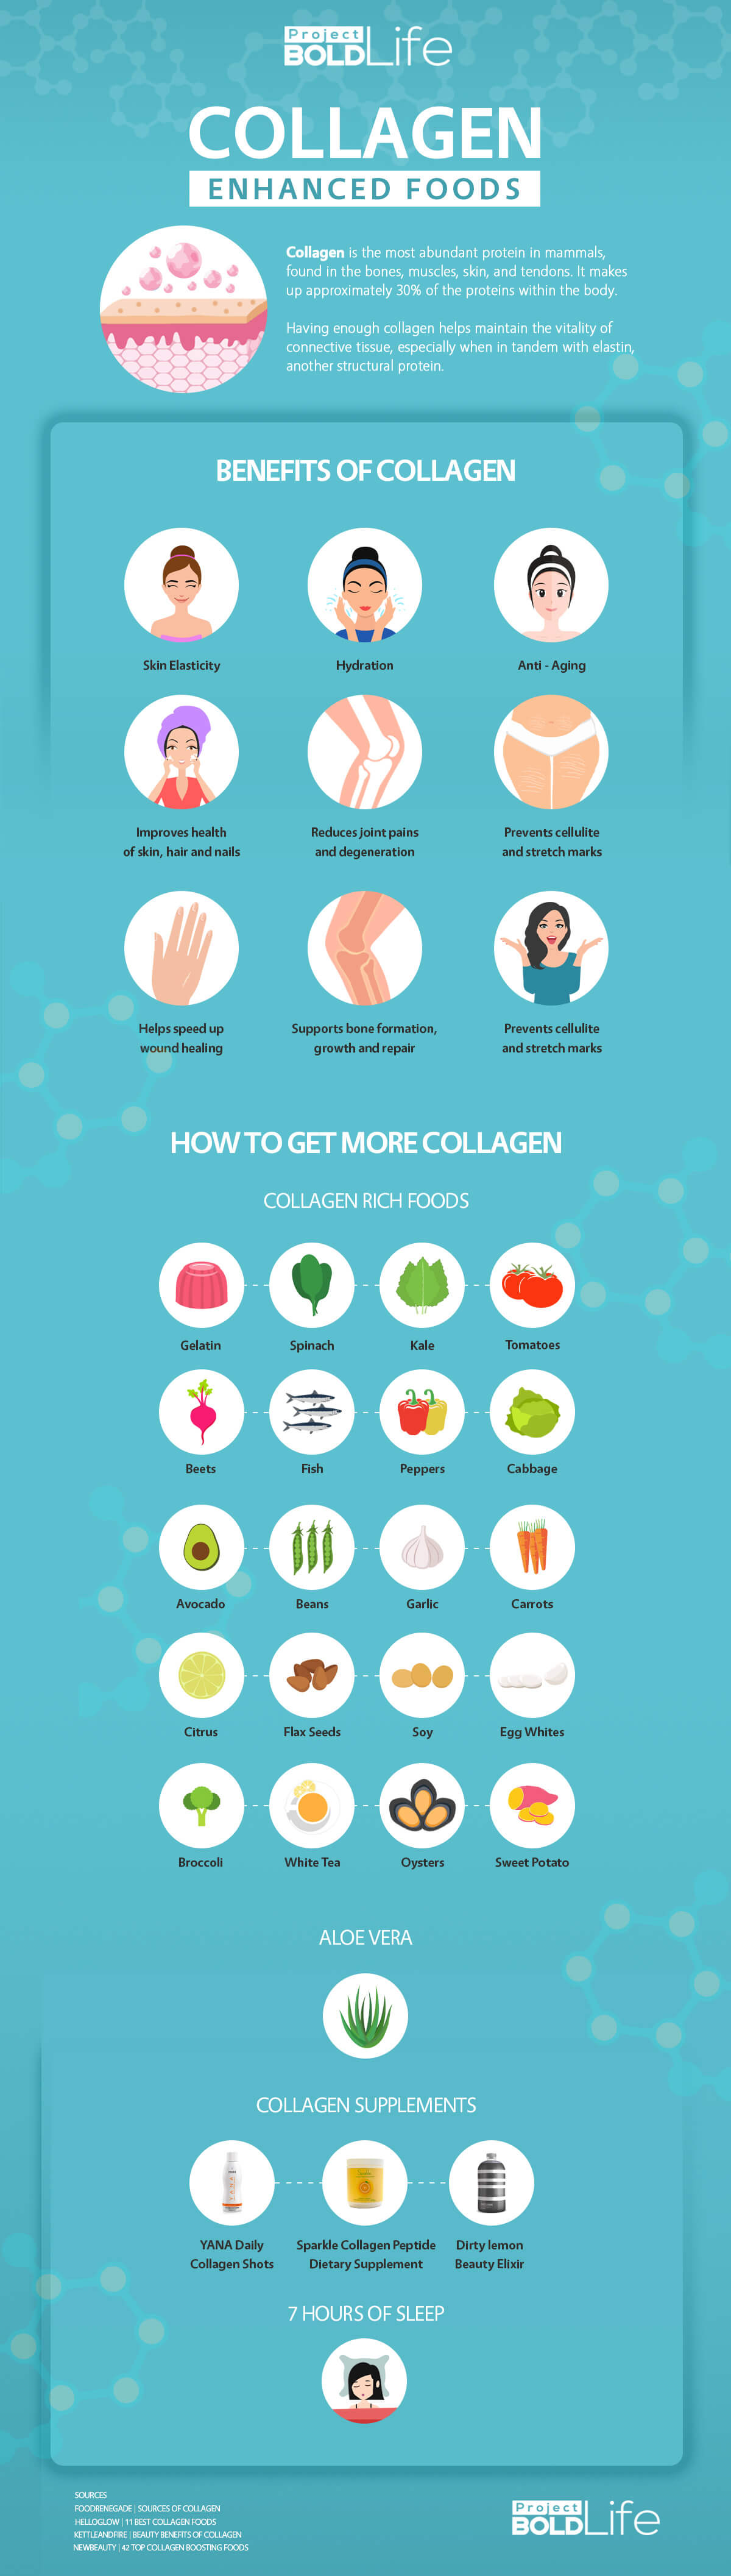 Collagen enhanced foods full infographic